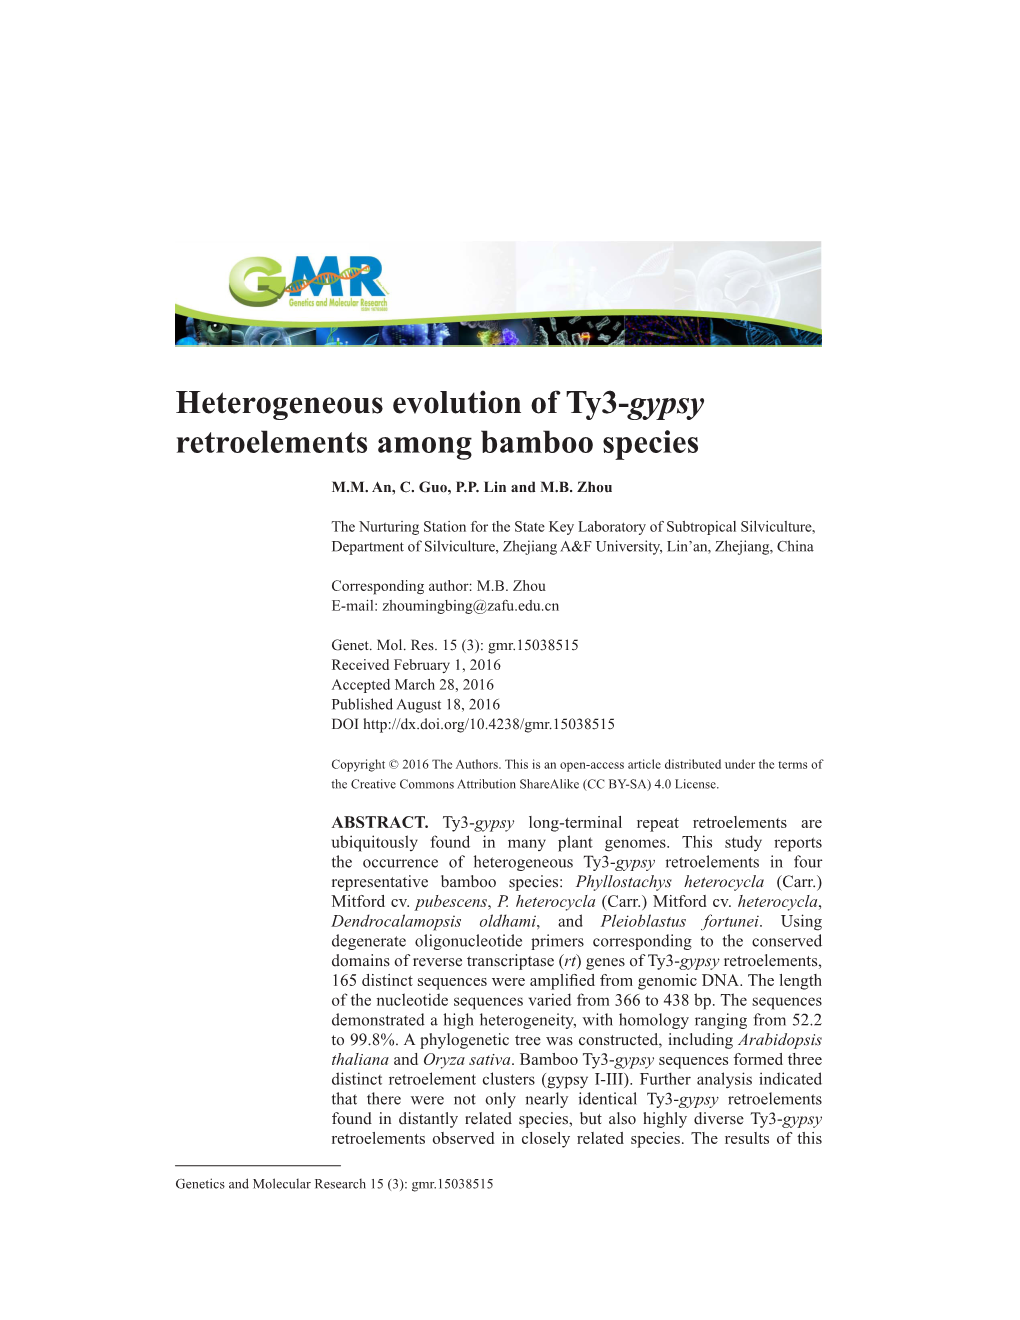 Heterogeneous Evolution of Ty3-Gypsy Retroelements Among Bamboo Species